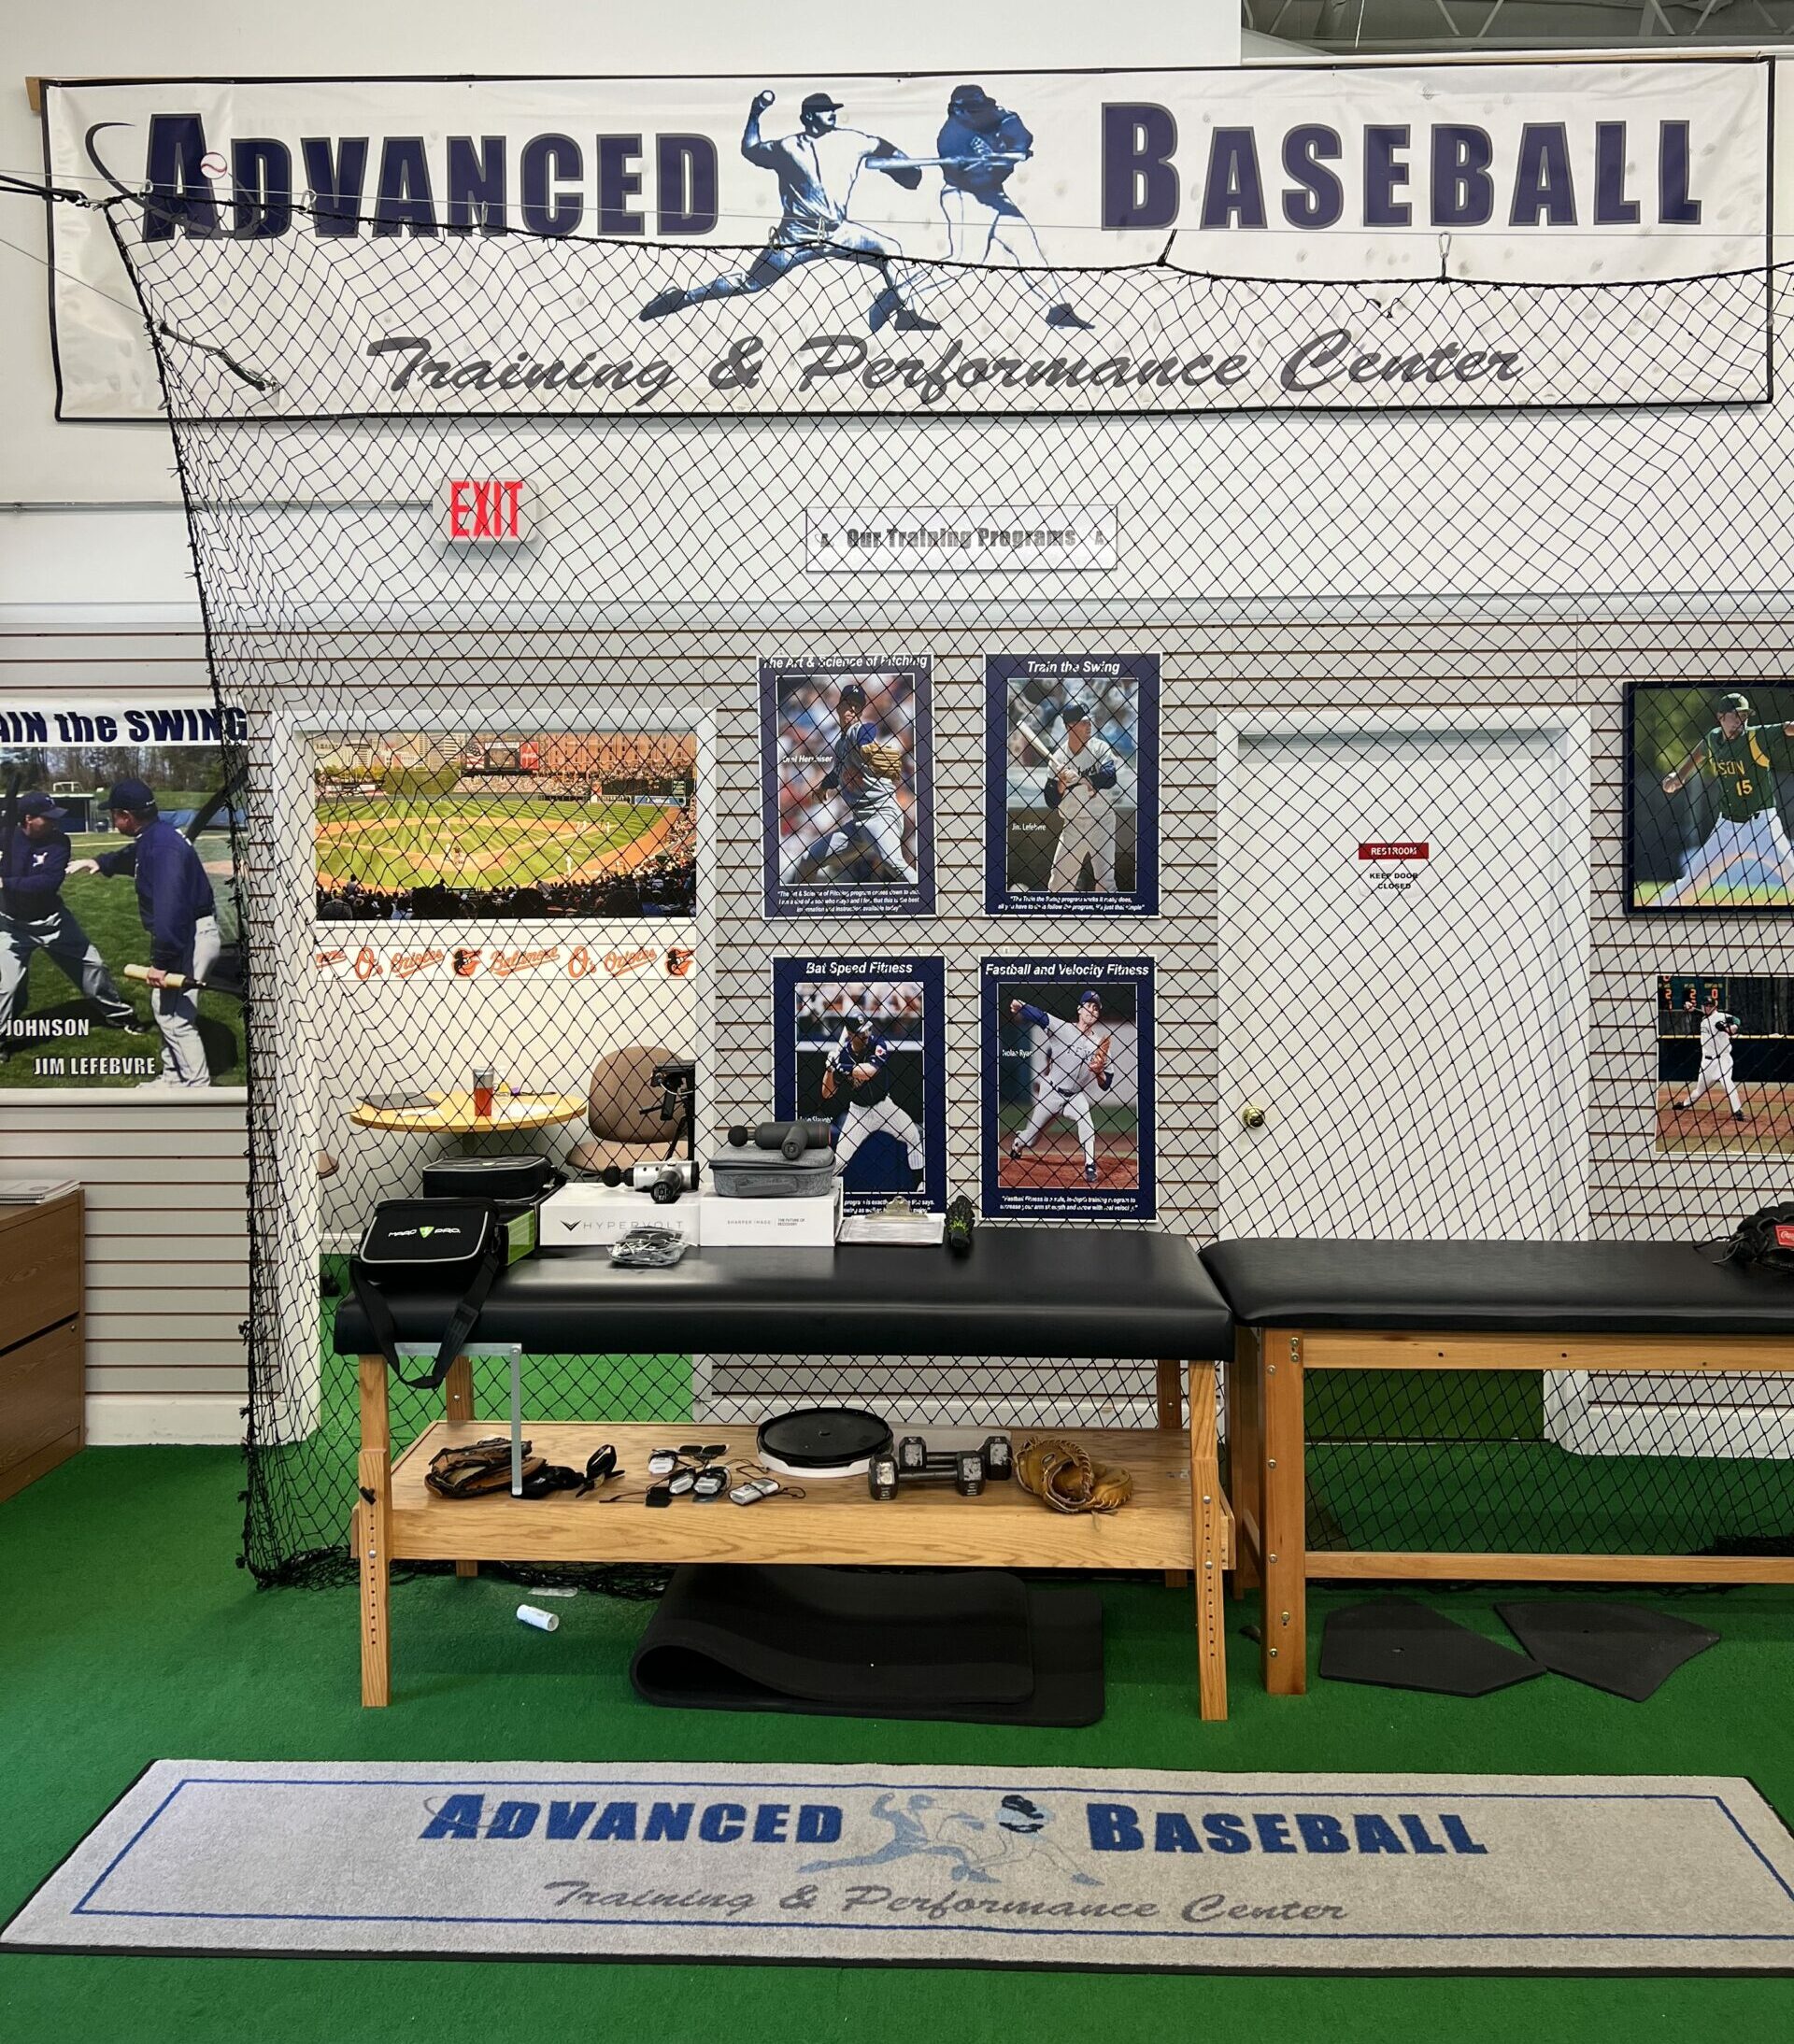 about Advanced Baseball training Center